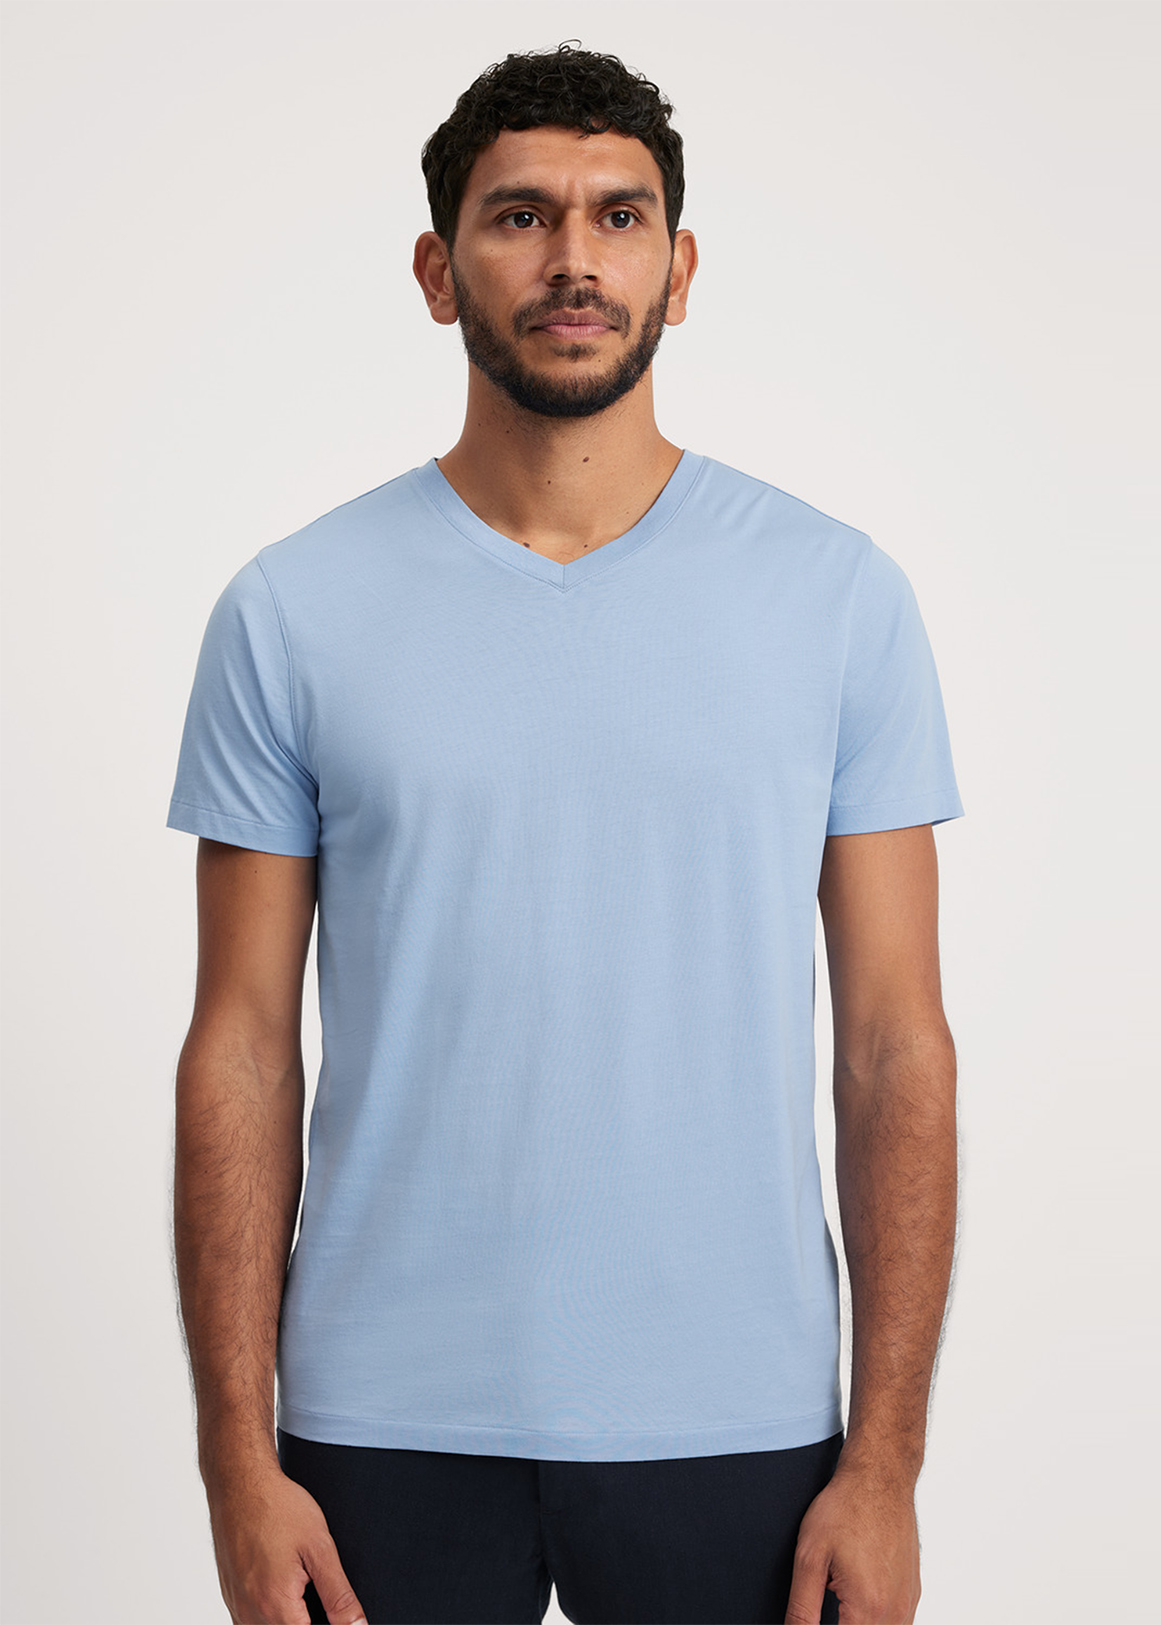 Pima Cotton V-Neck T-Shirt | Woolworths.co.za